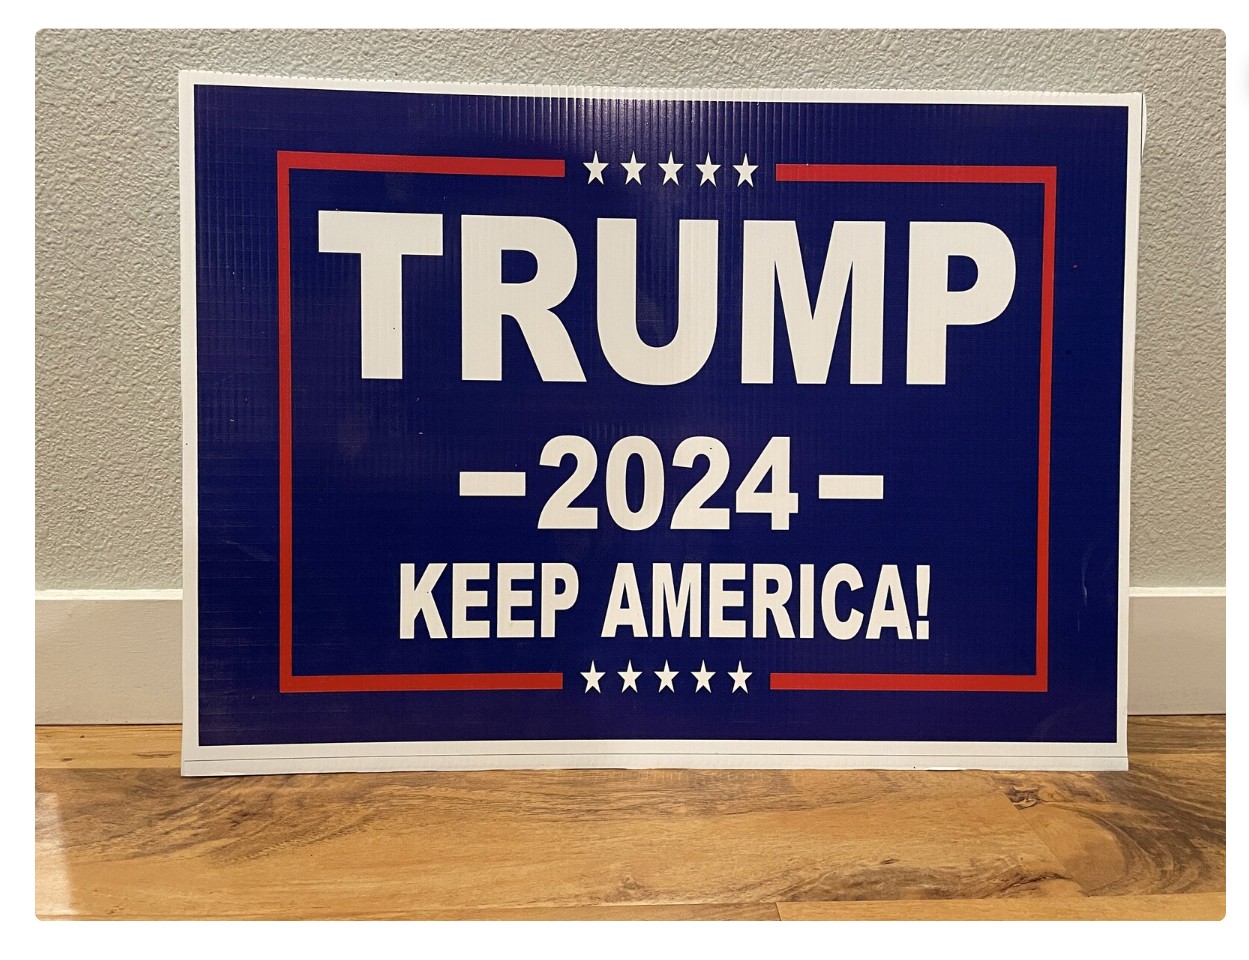 Trump 2024 Yard Signs - Keep America